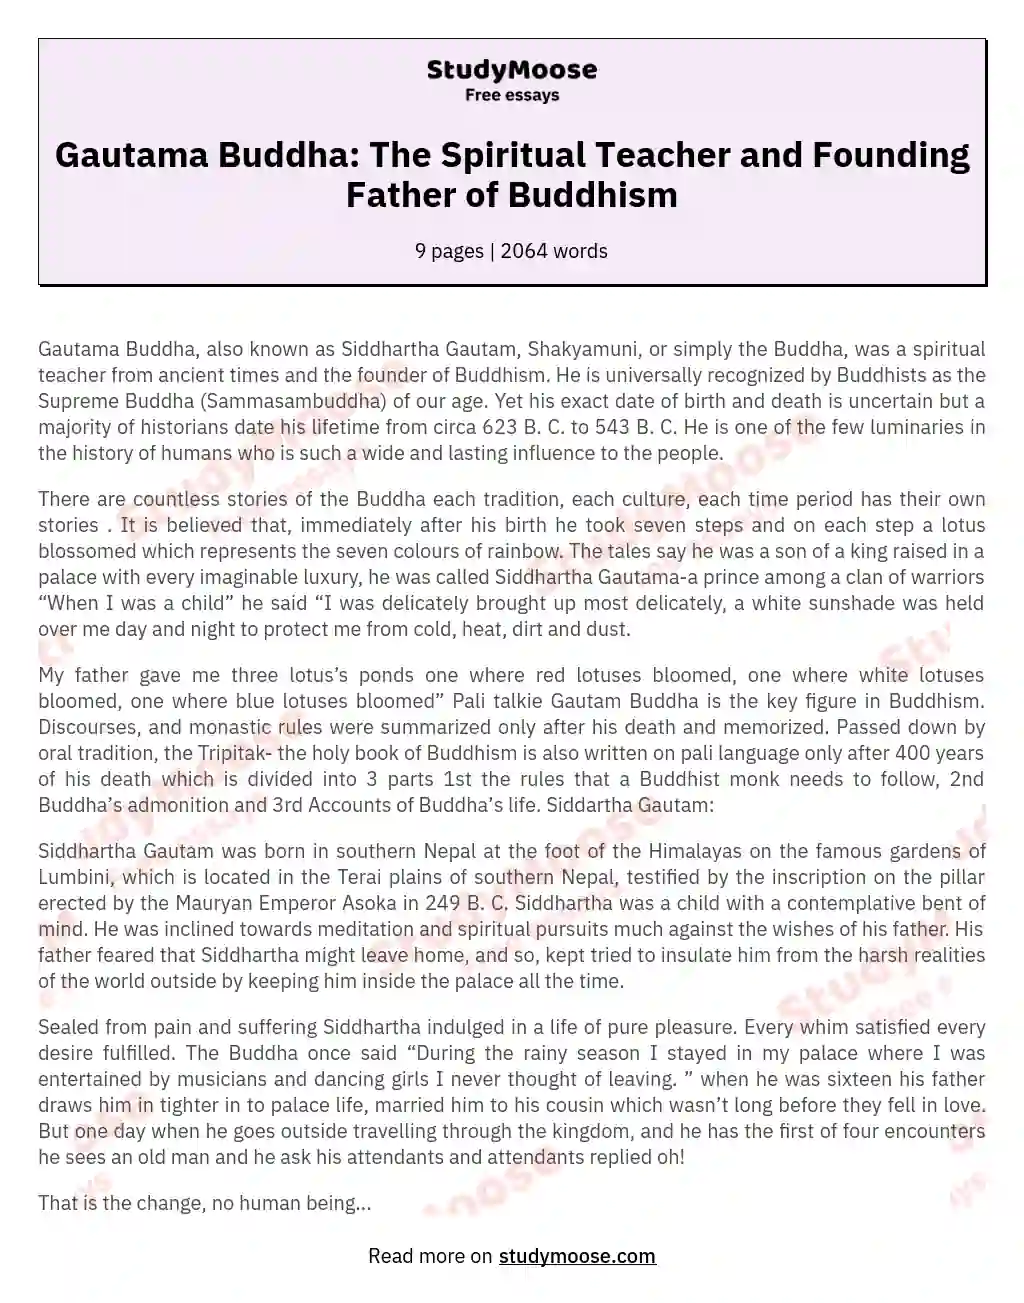 Gautama Buddha: The Spiritual Teacher and Founding Father of Buddhism essay